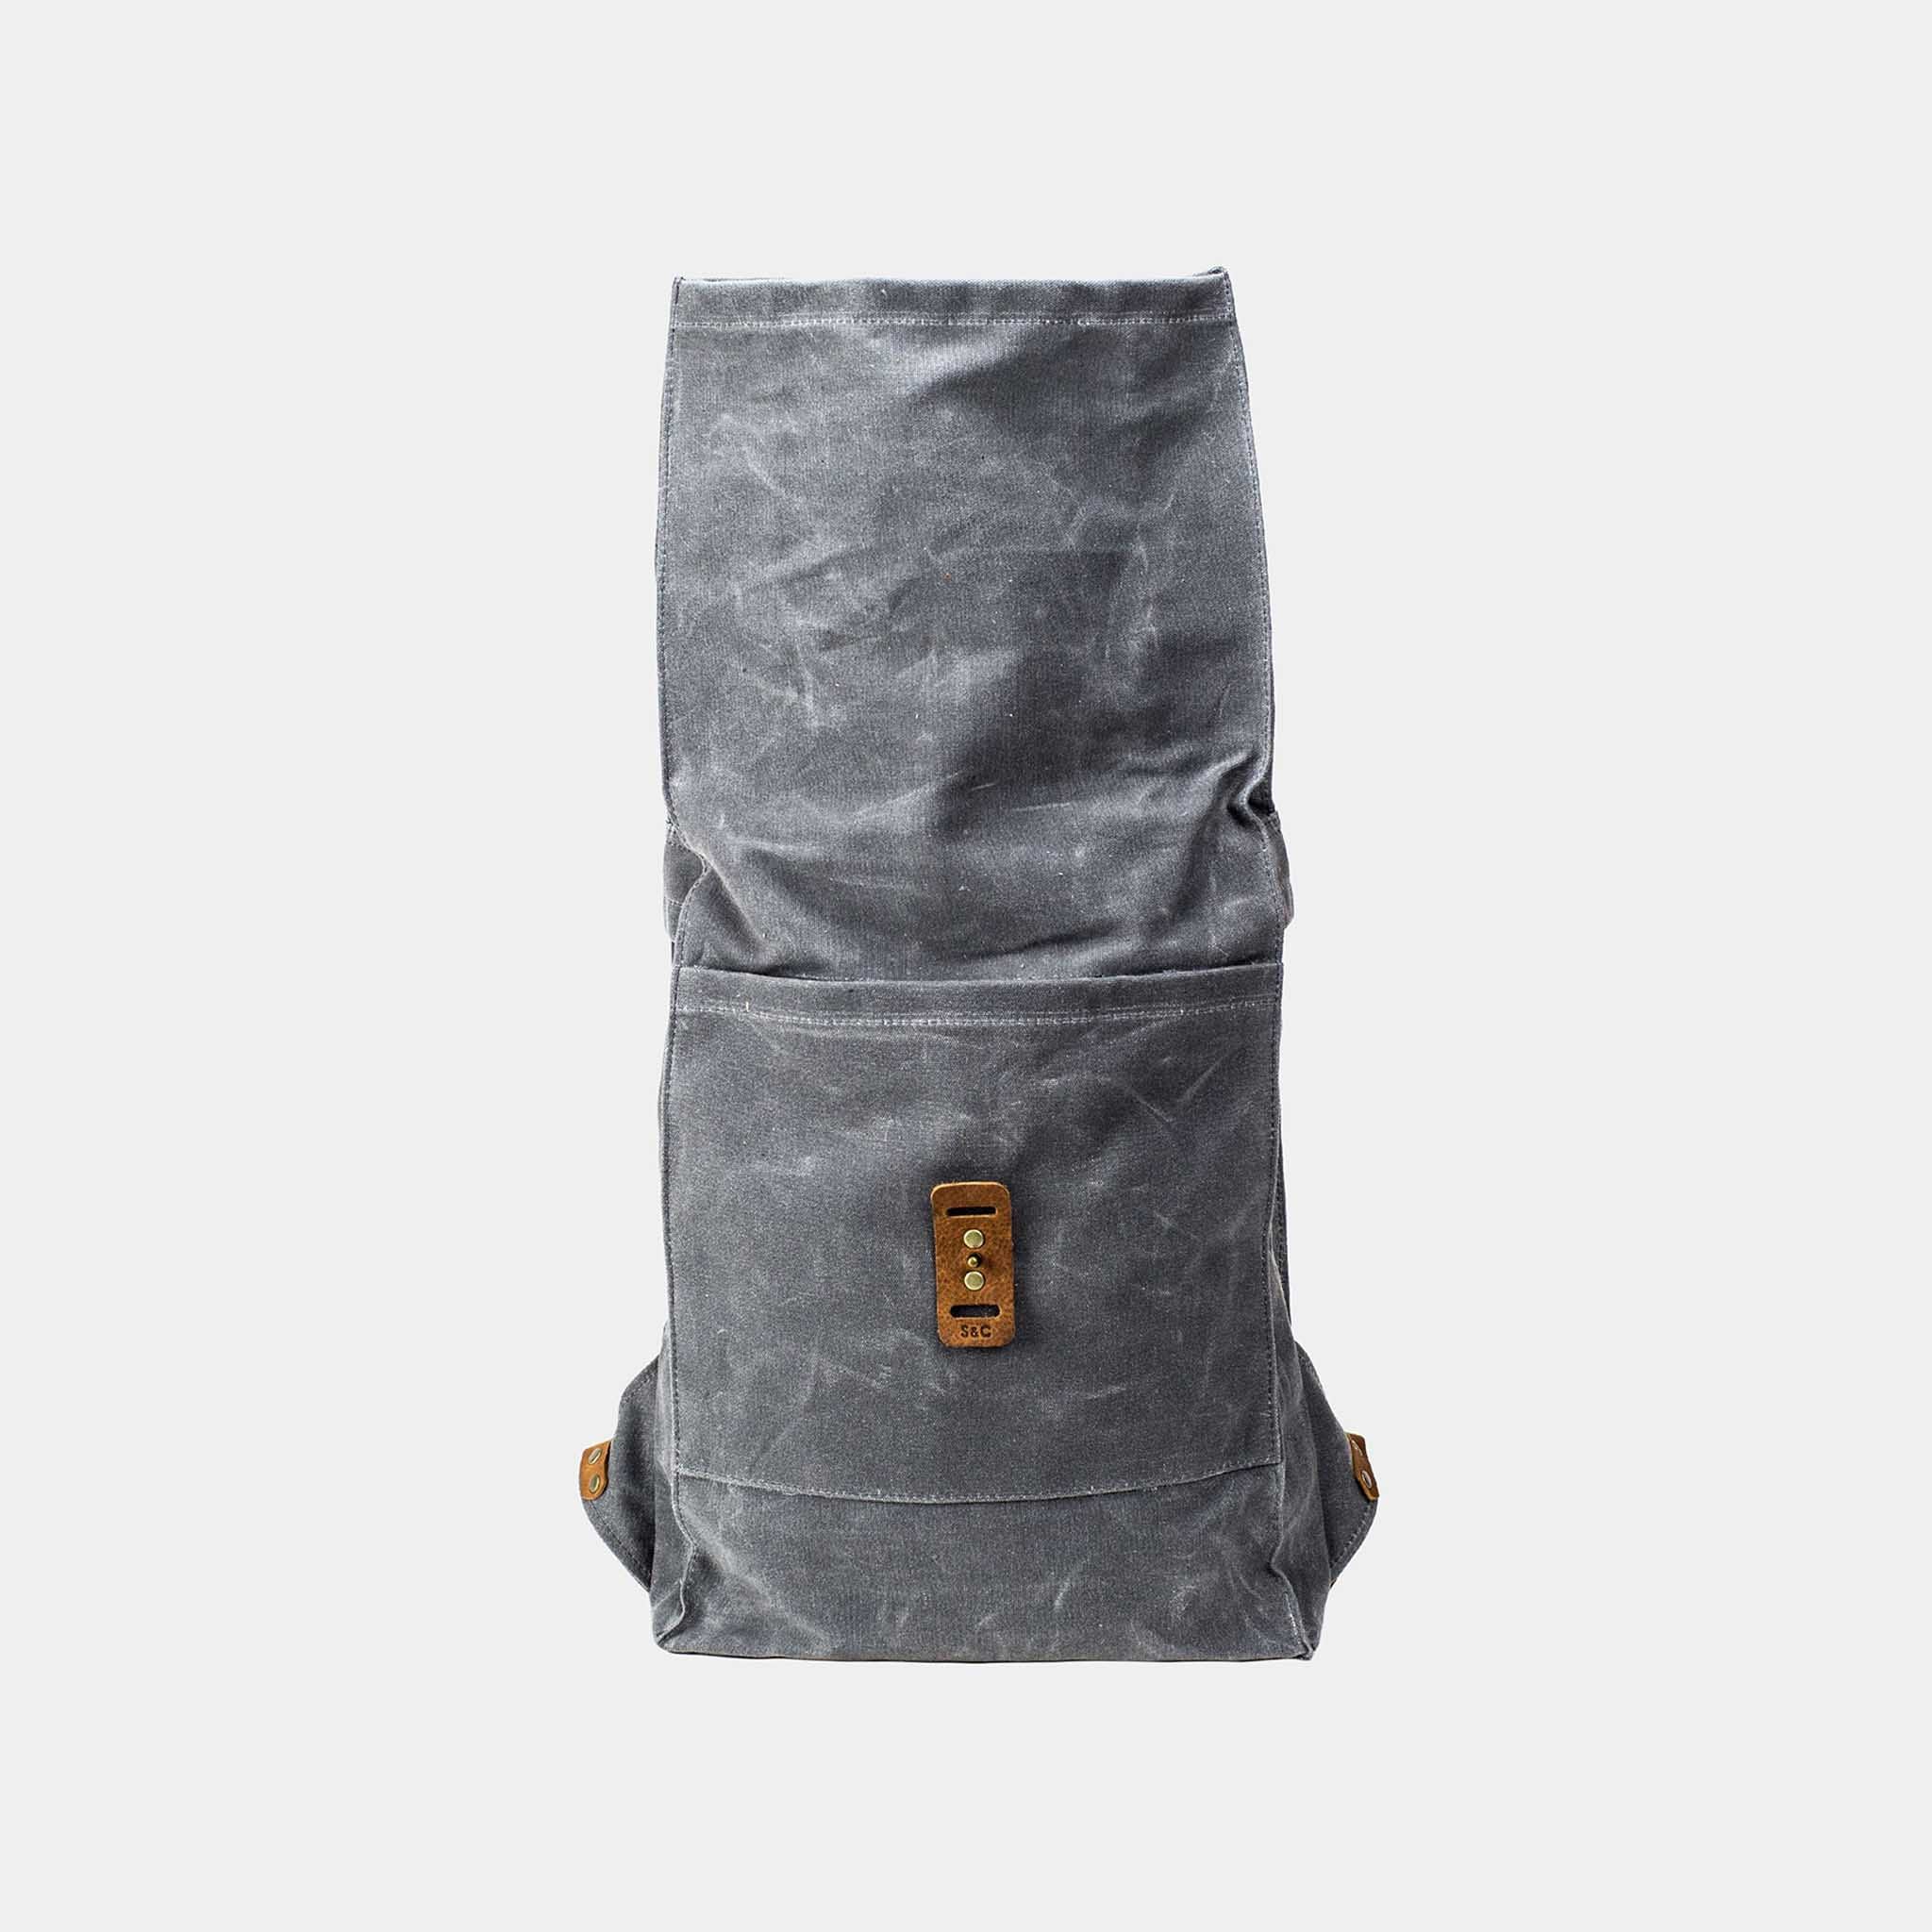 Ruck Backpack